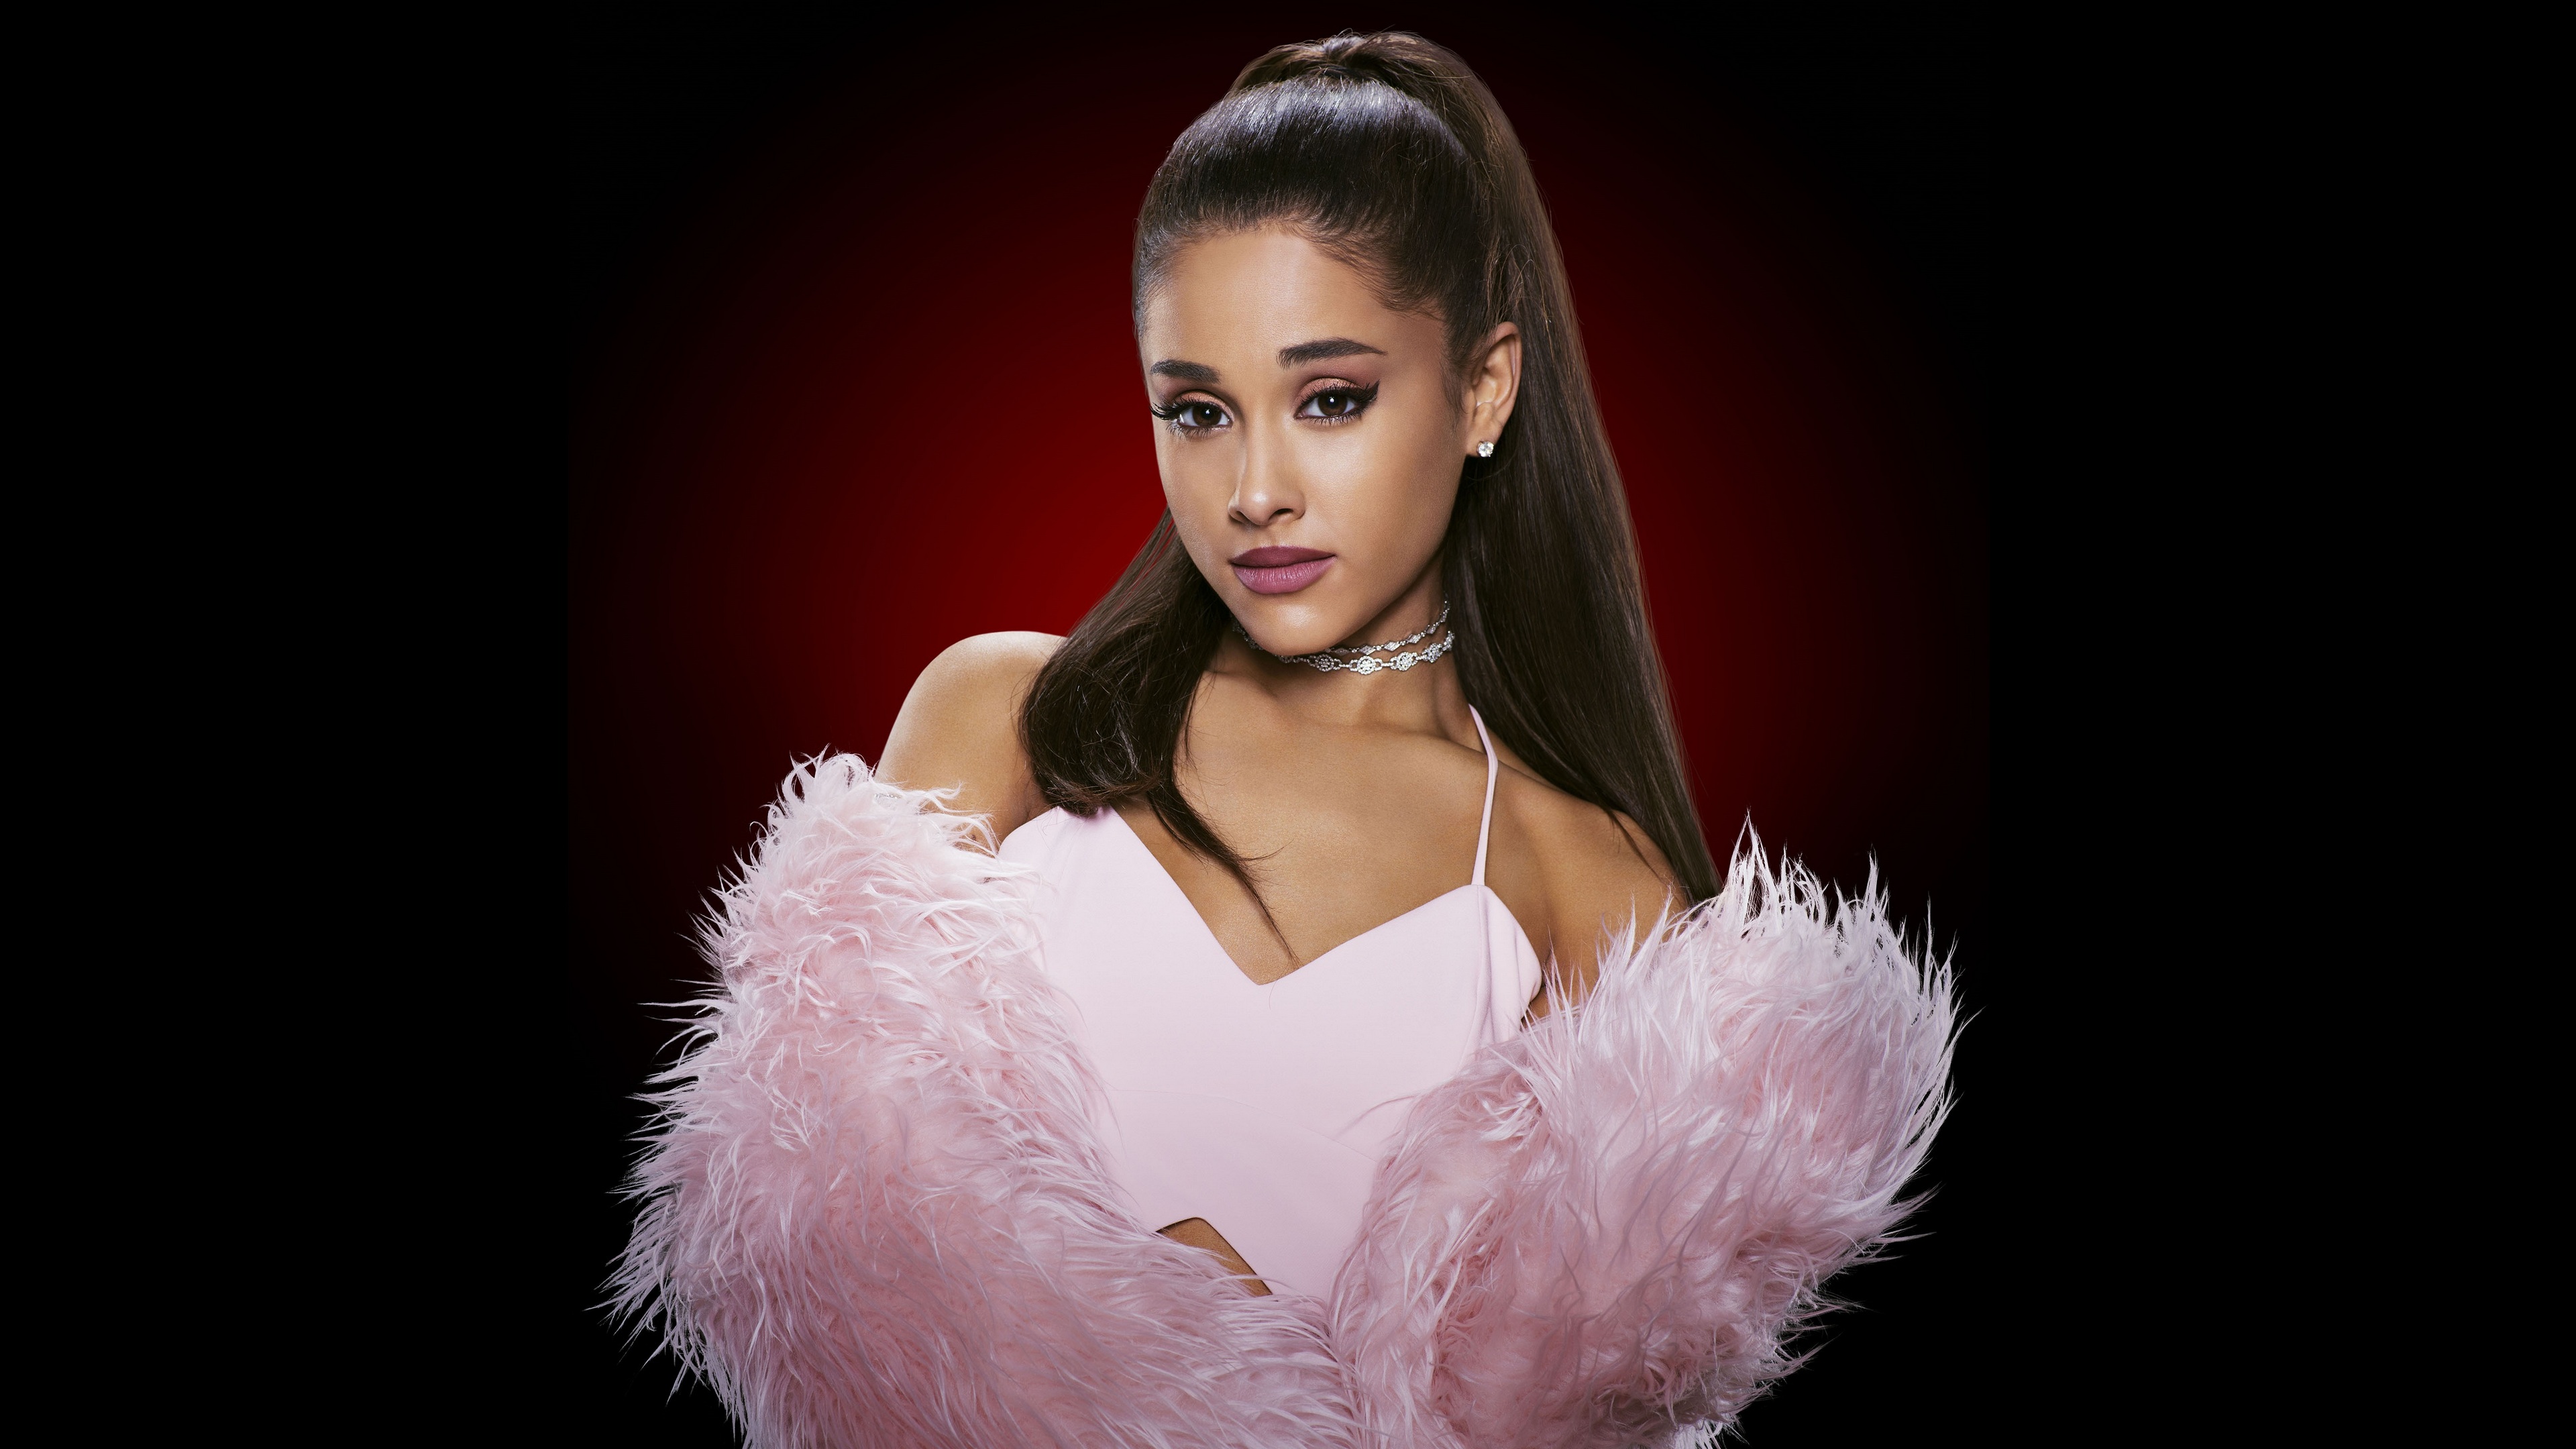 Women Singer Actress Model Dress Fur Coats Makeup Brunette Dark Background Ariana Grande 3840x2160